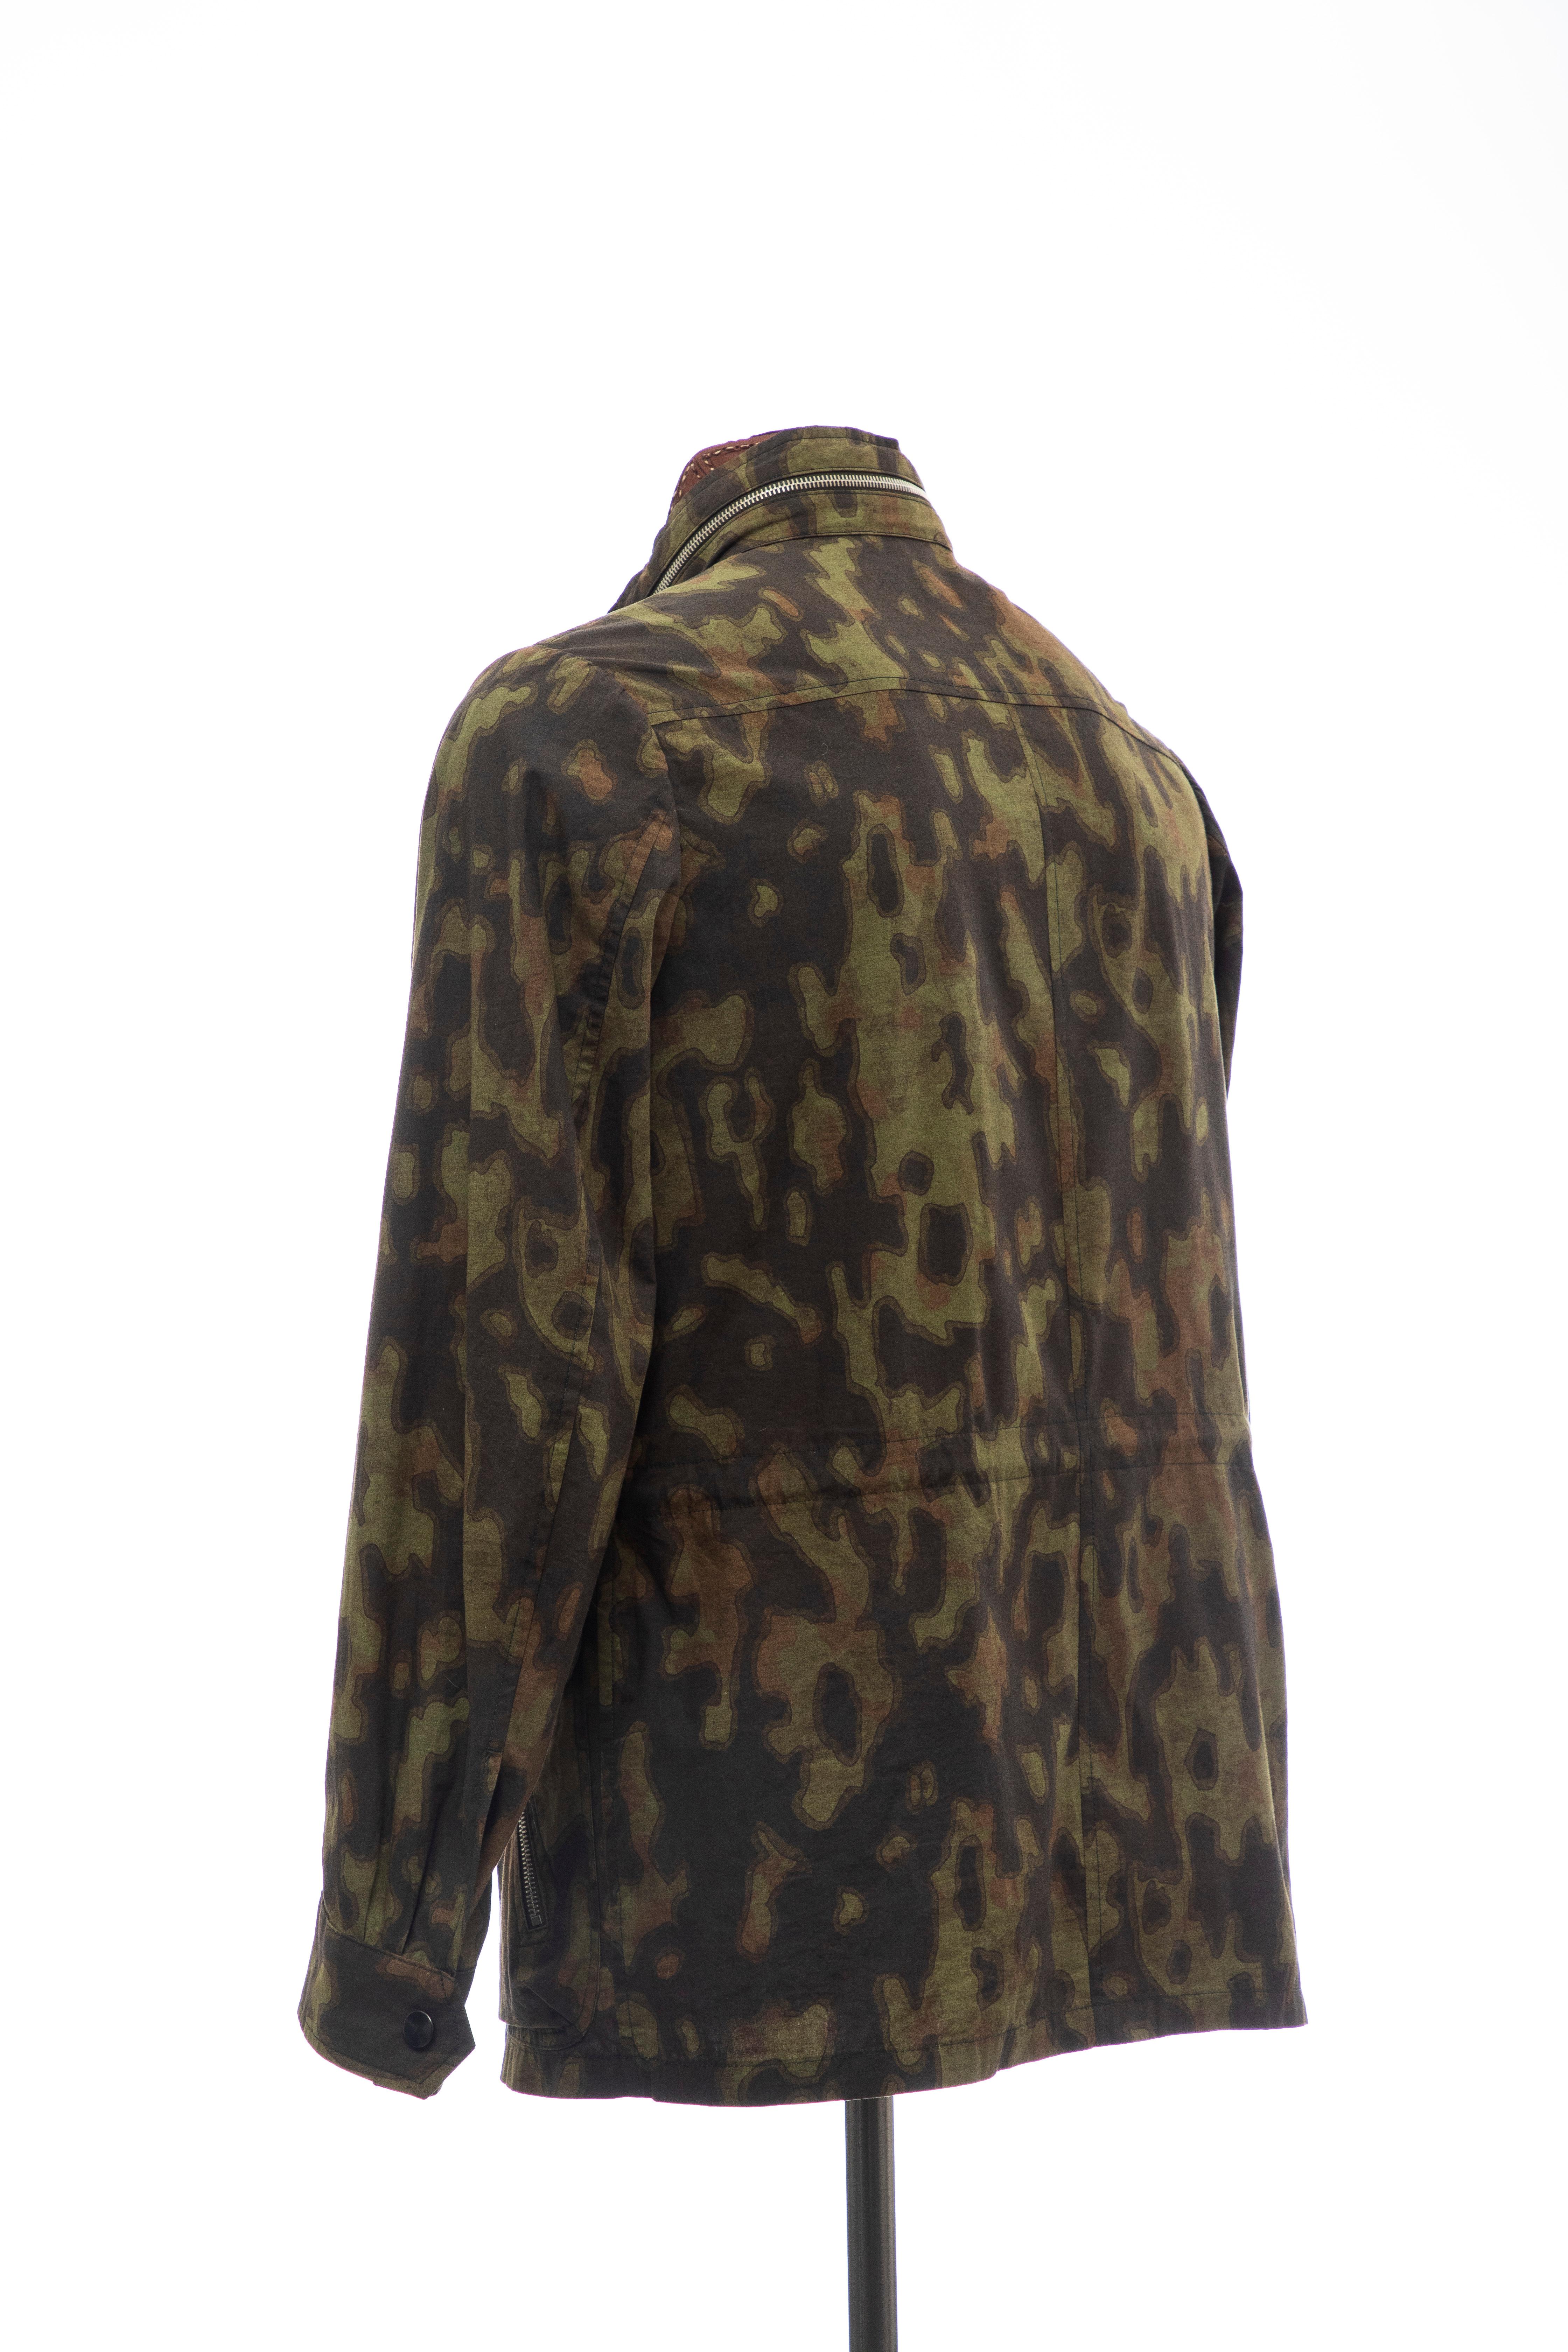 Dries Van Noten Men's Cotton Camouflage Jacket, Spring 2013 For Sale 1